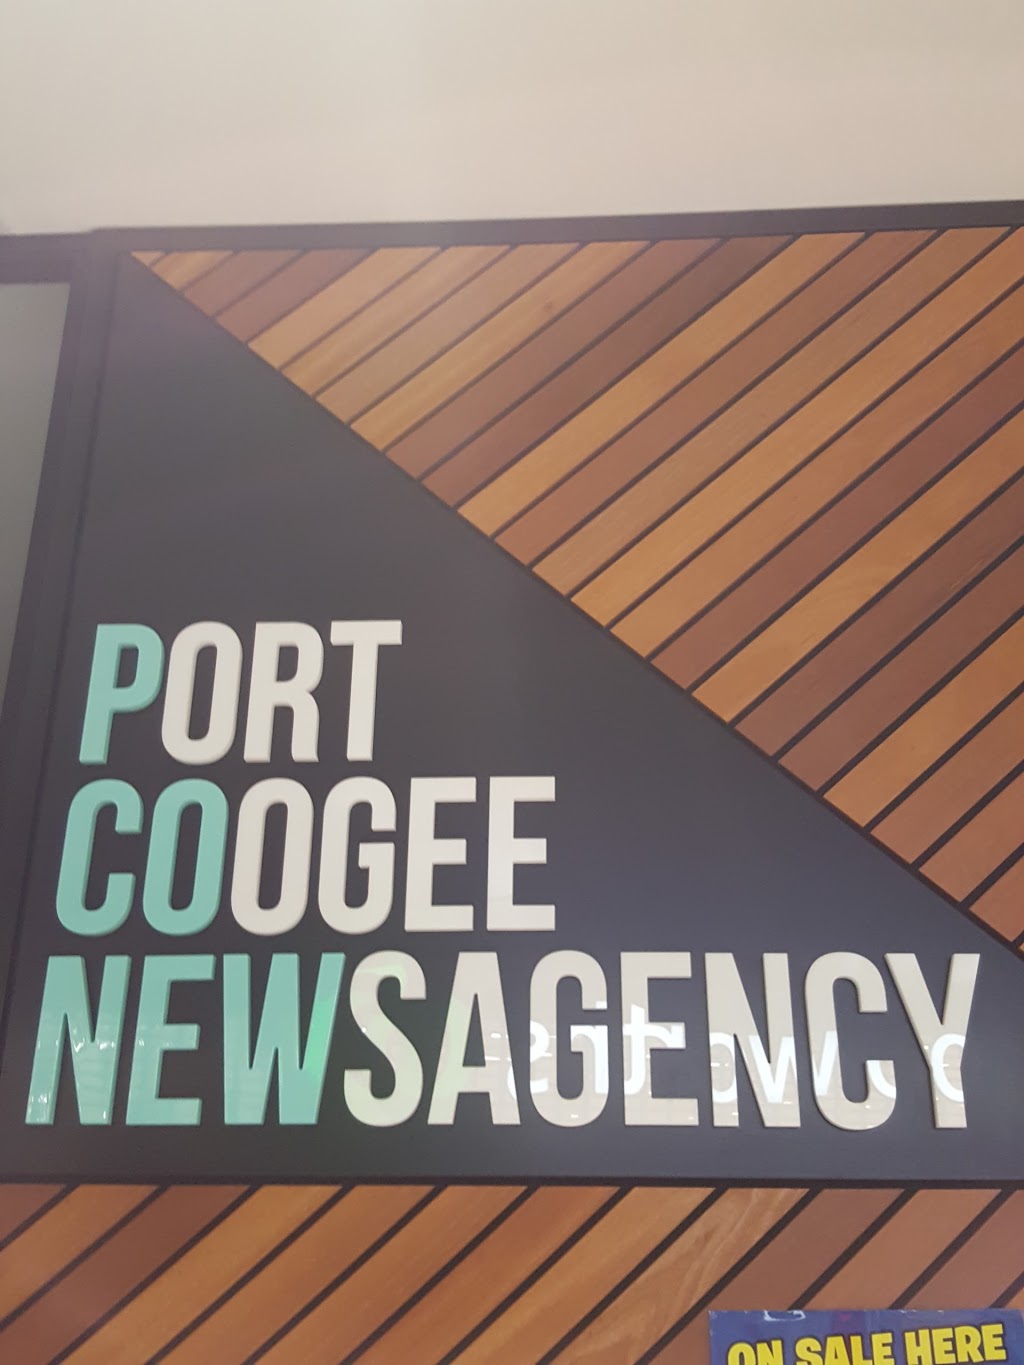 Port Coogee News Agency | store | 64 Orsino Blvd, North Coogee WA 6163, Australia